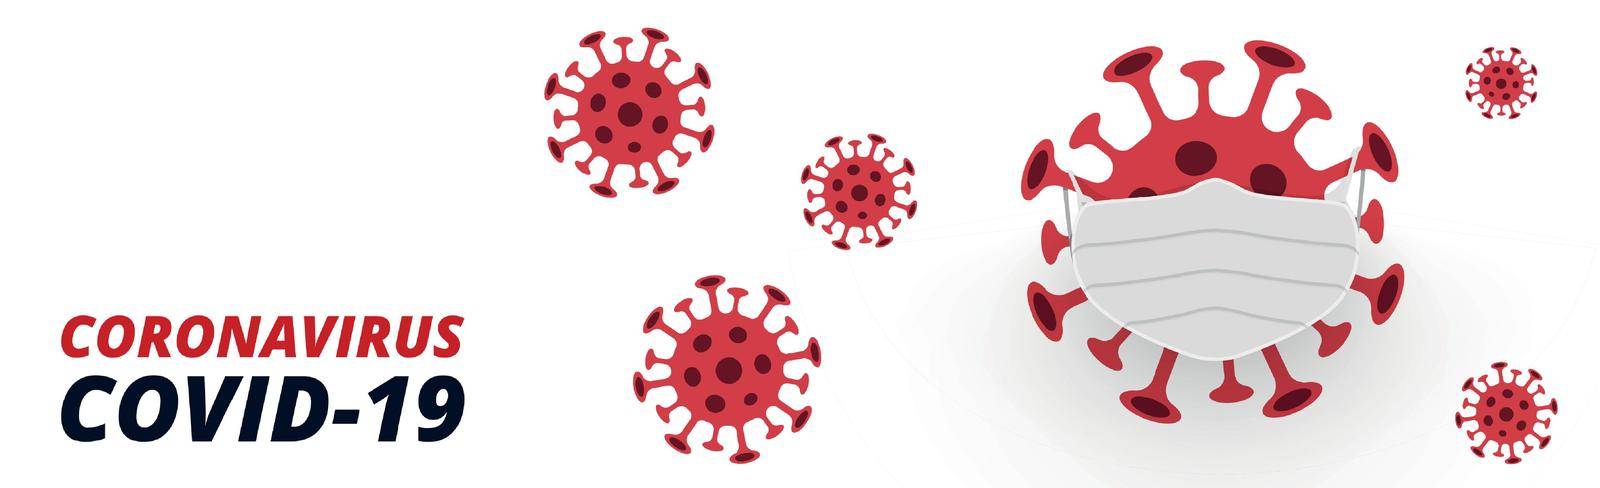 Dangerous new virus COVID-19, the image of bacteria - Vector illustration